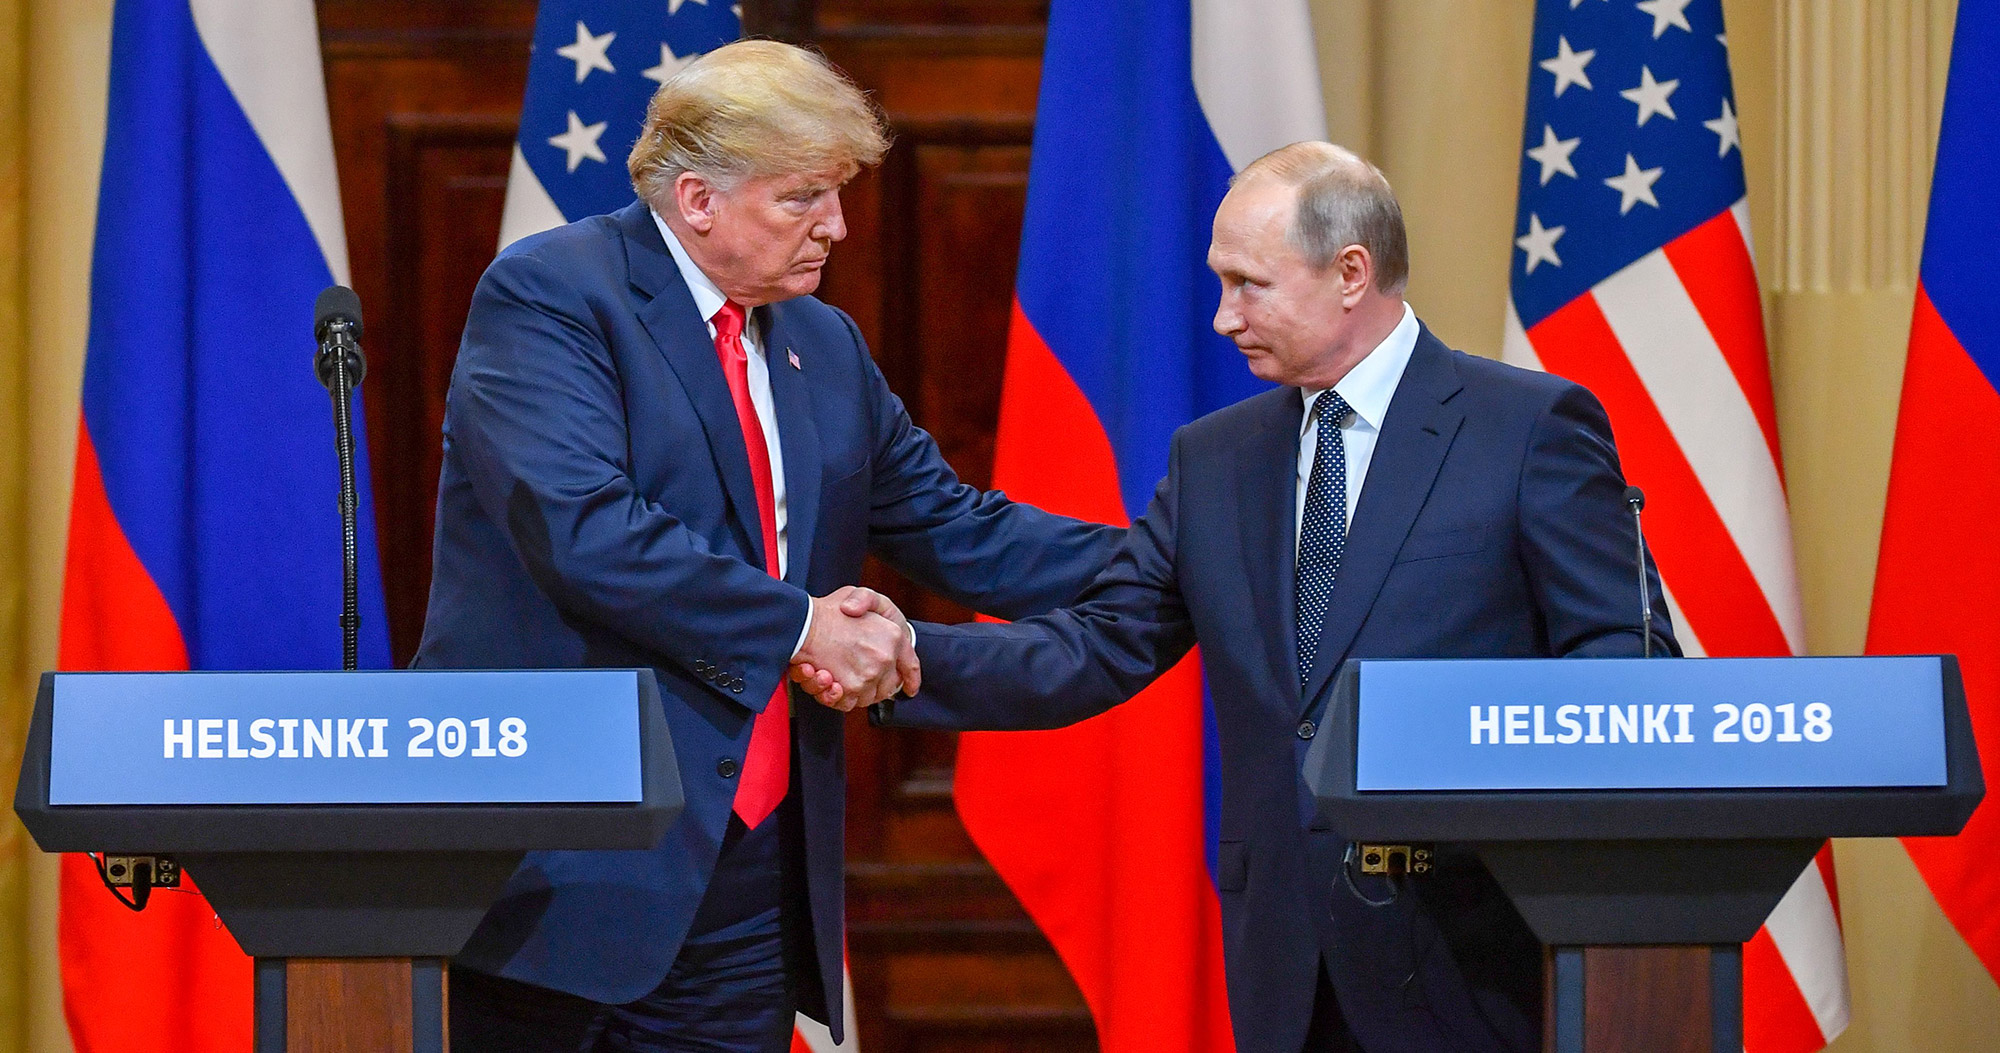 Trump and Putin shaking hands in Helsinki